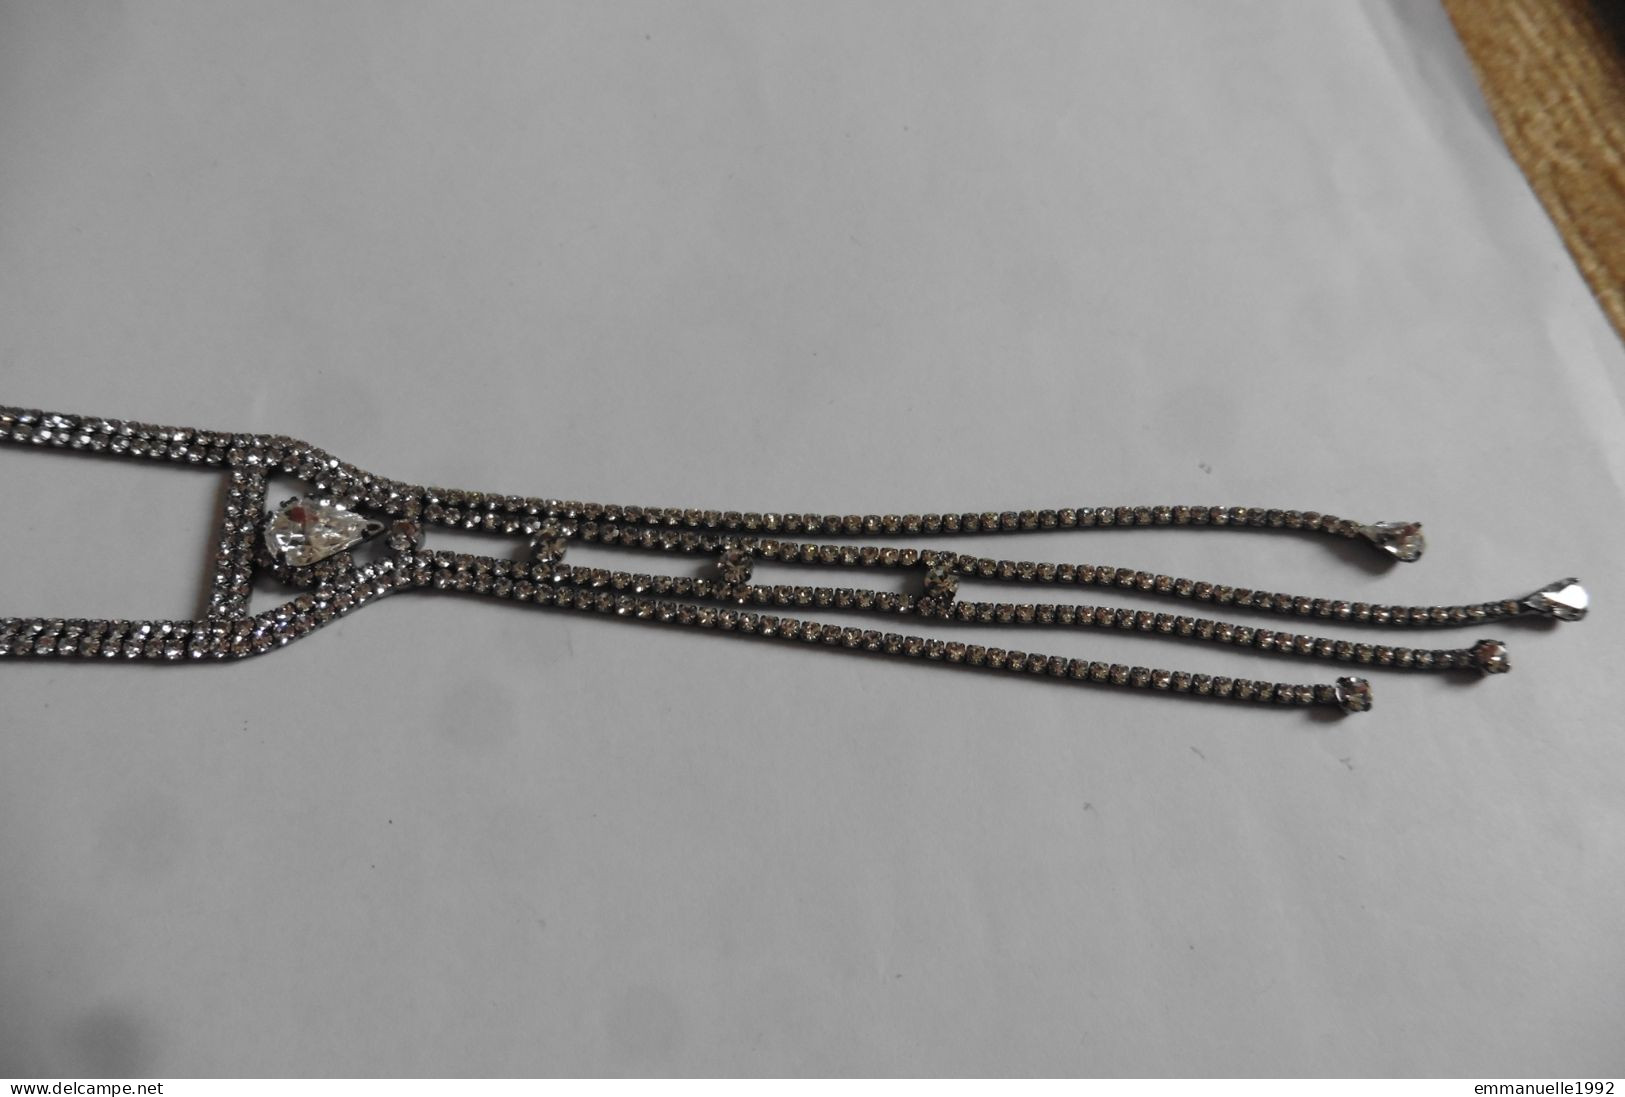 Neuf - Long collier sautoir marque Eifel style Art Deco métal argenté & cristaux strass